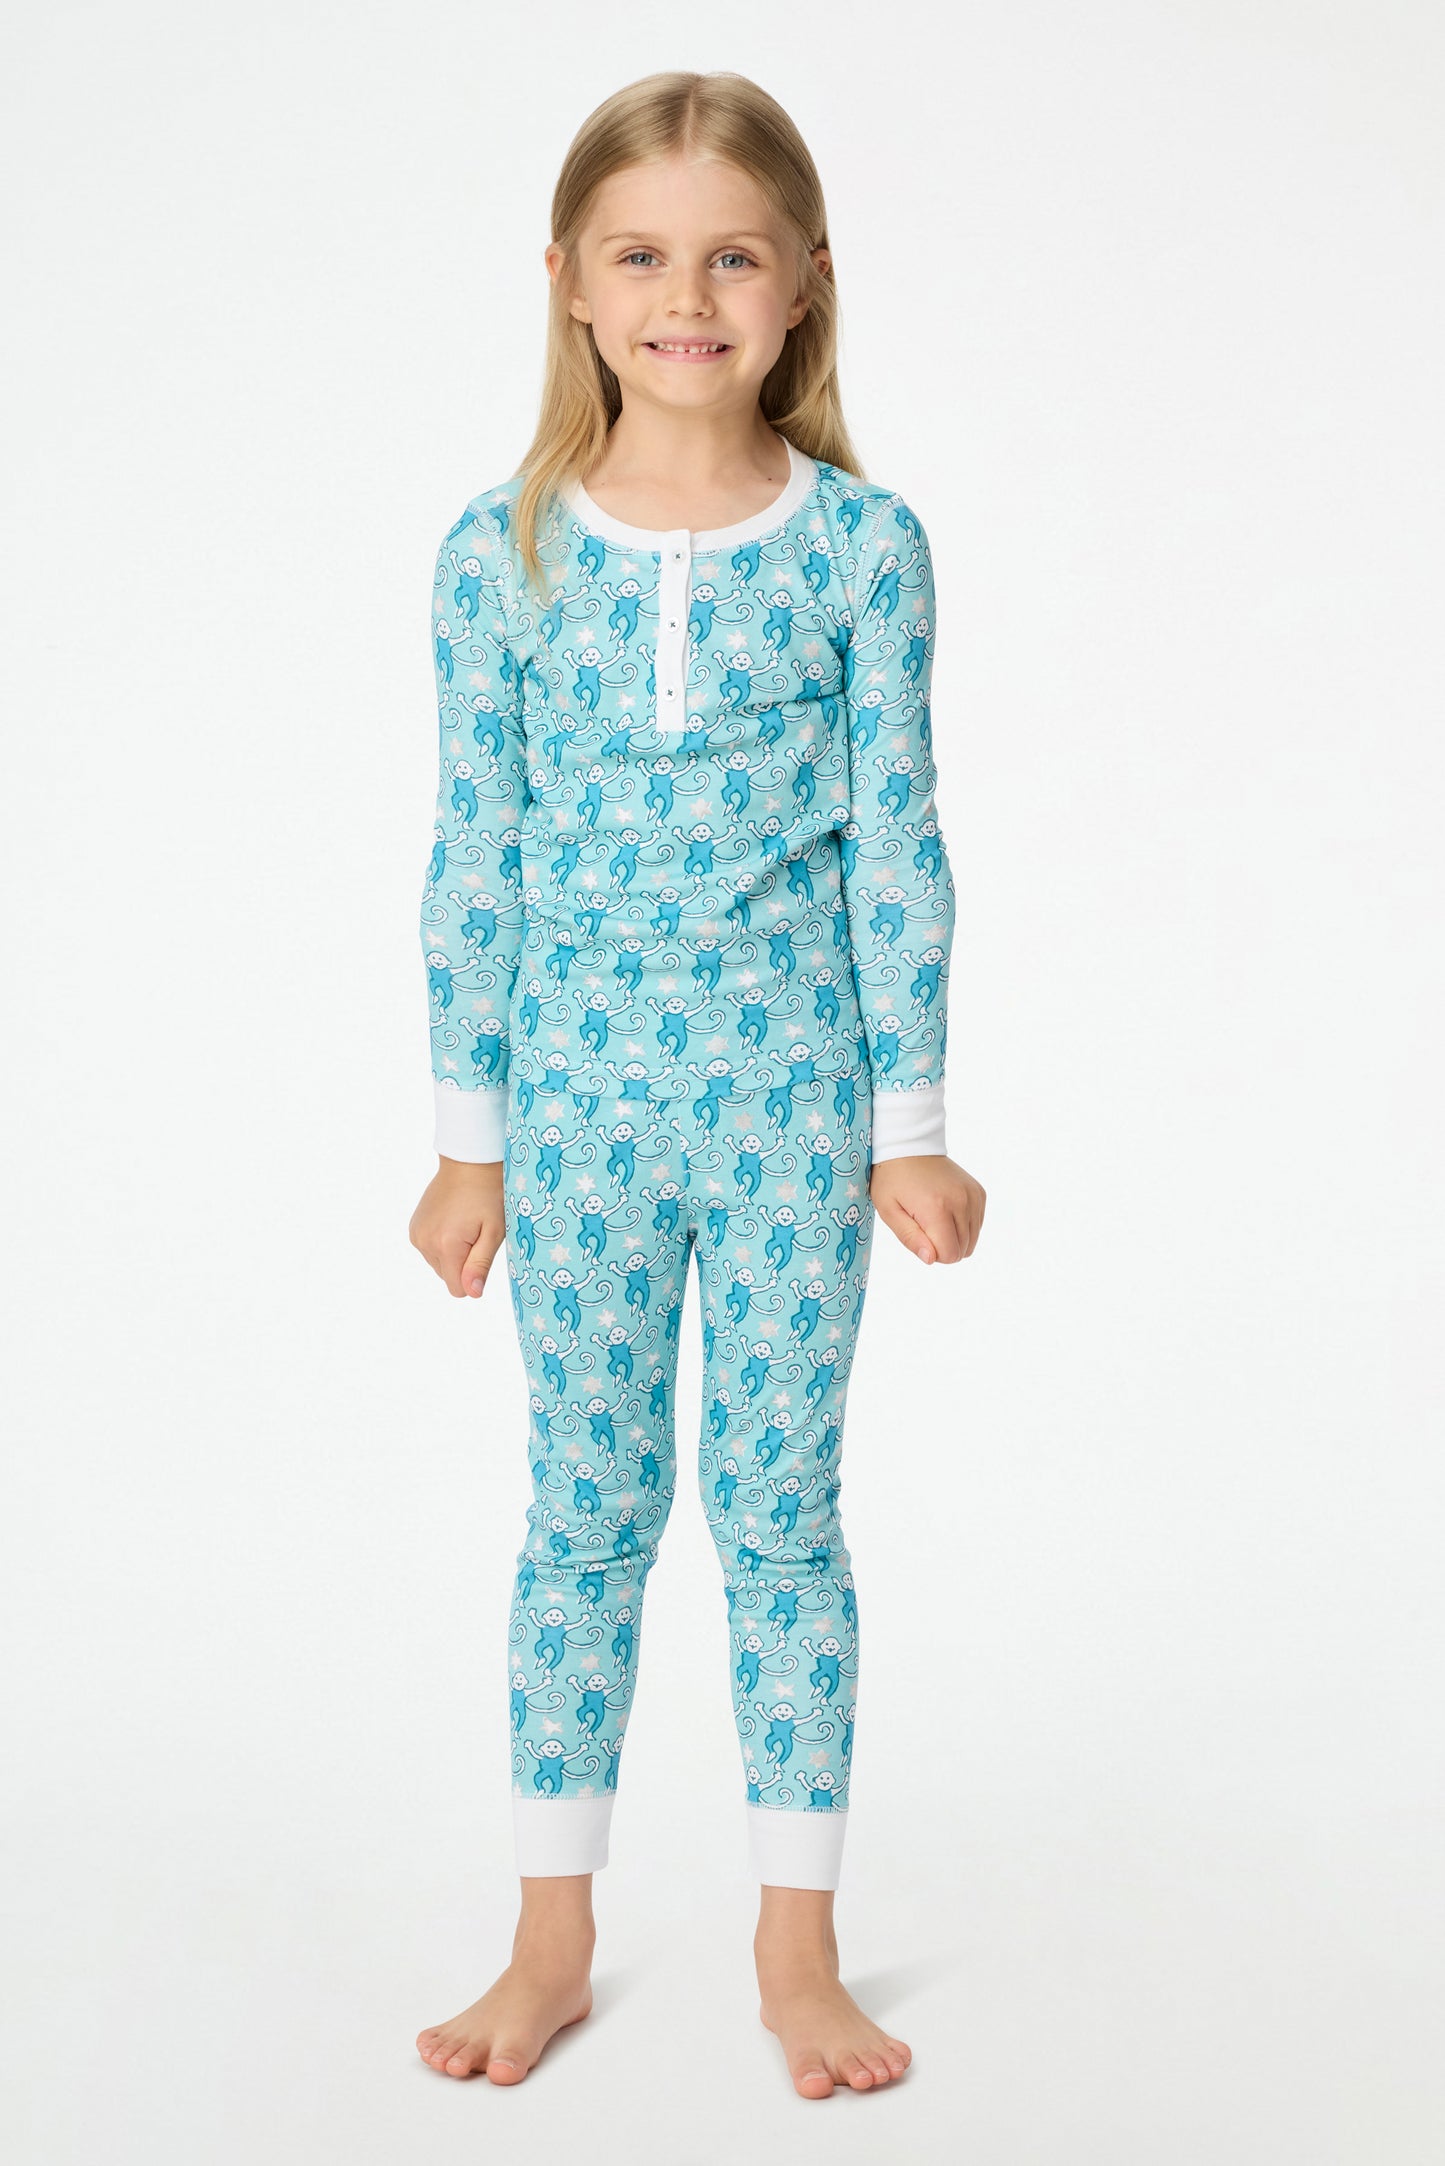 Roller Rabbit Kids Blue Star Monkey Pajamas